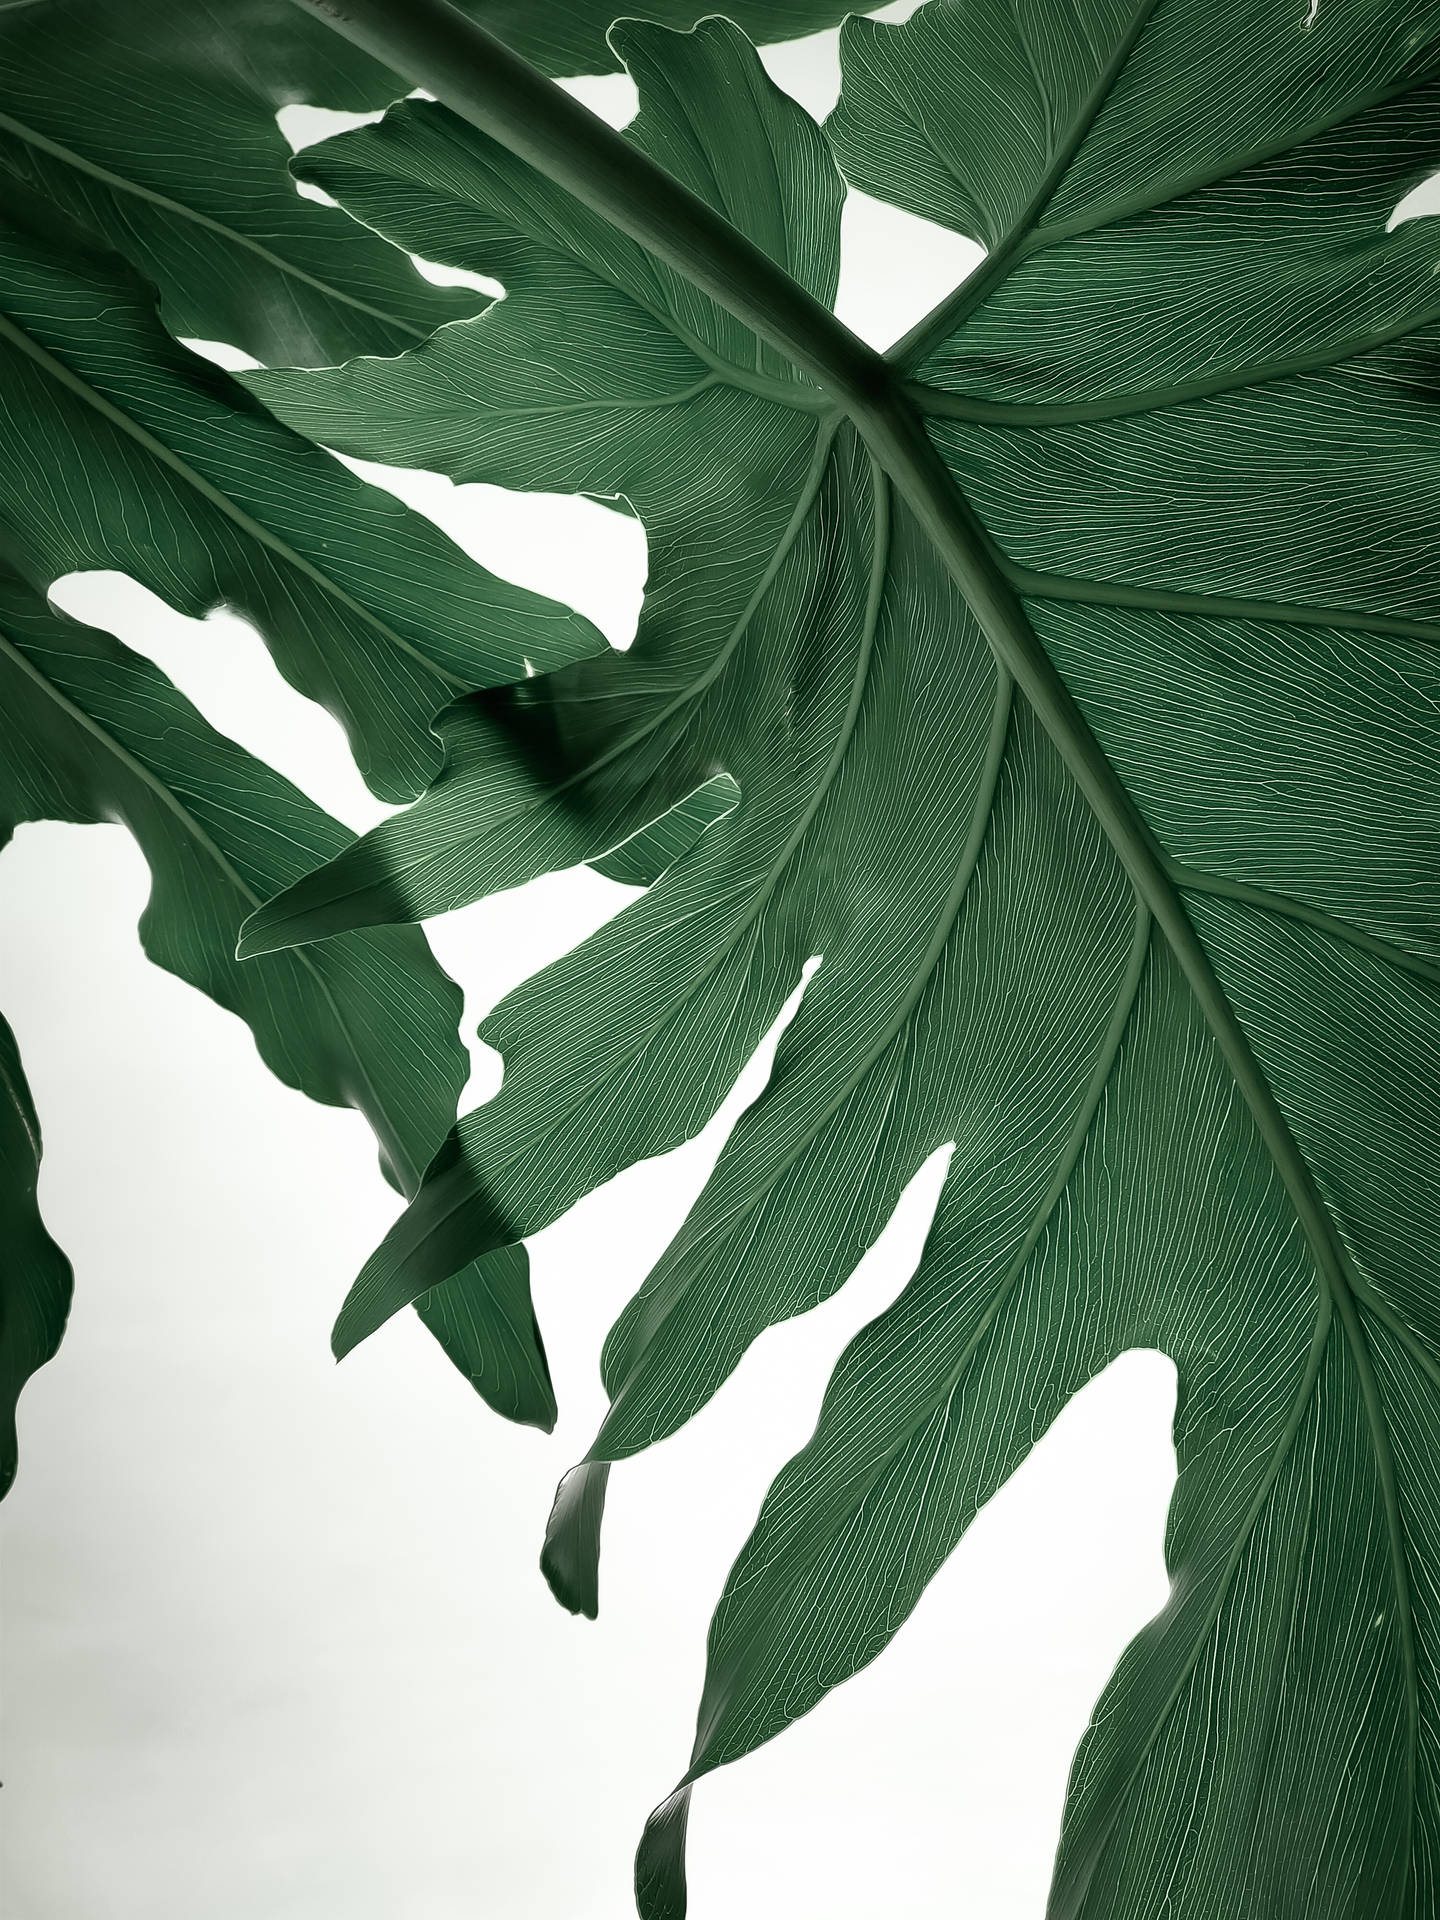 Hojasde Plantas De Queso Suizo Con Textura. Fondo de pantalla